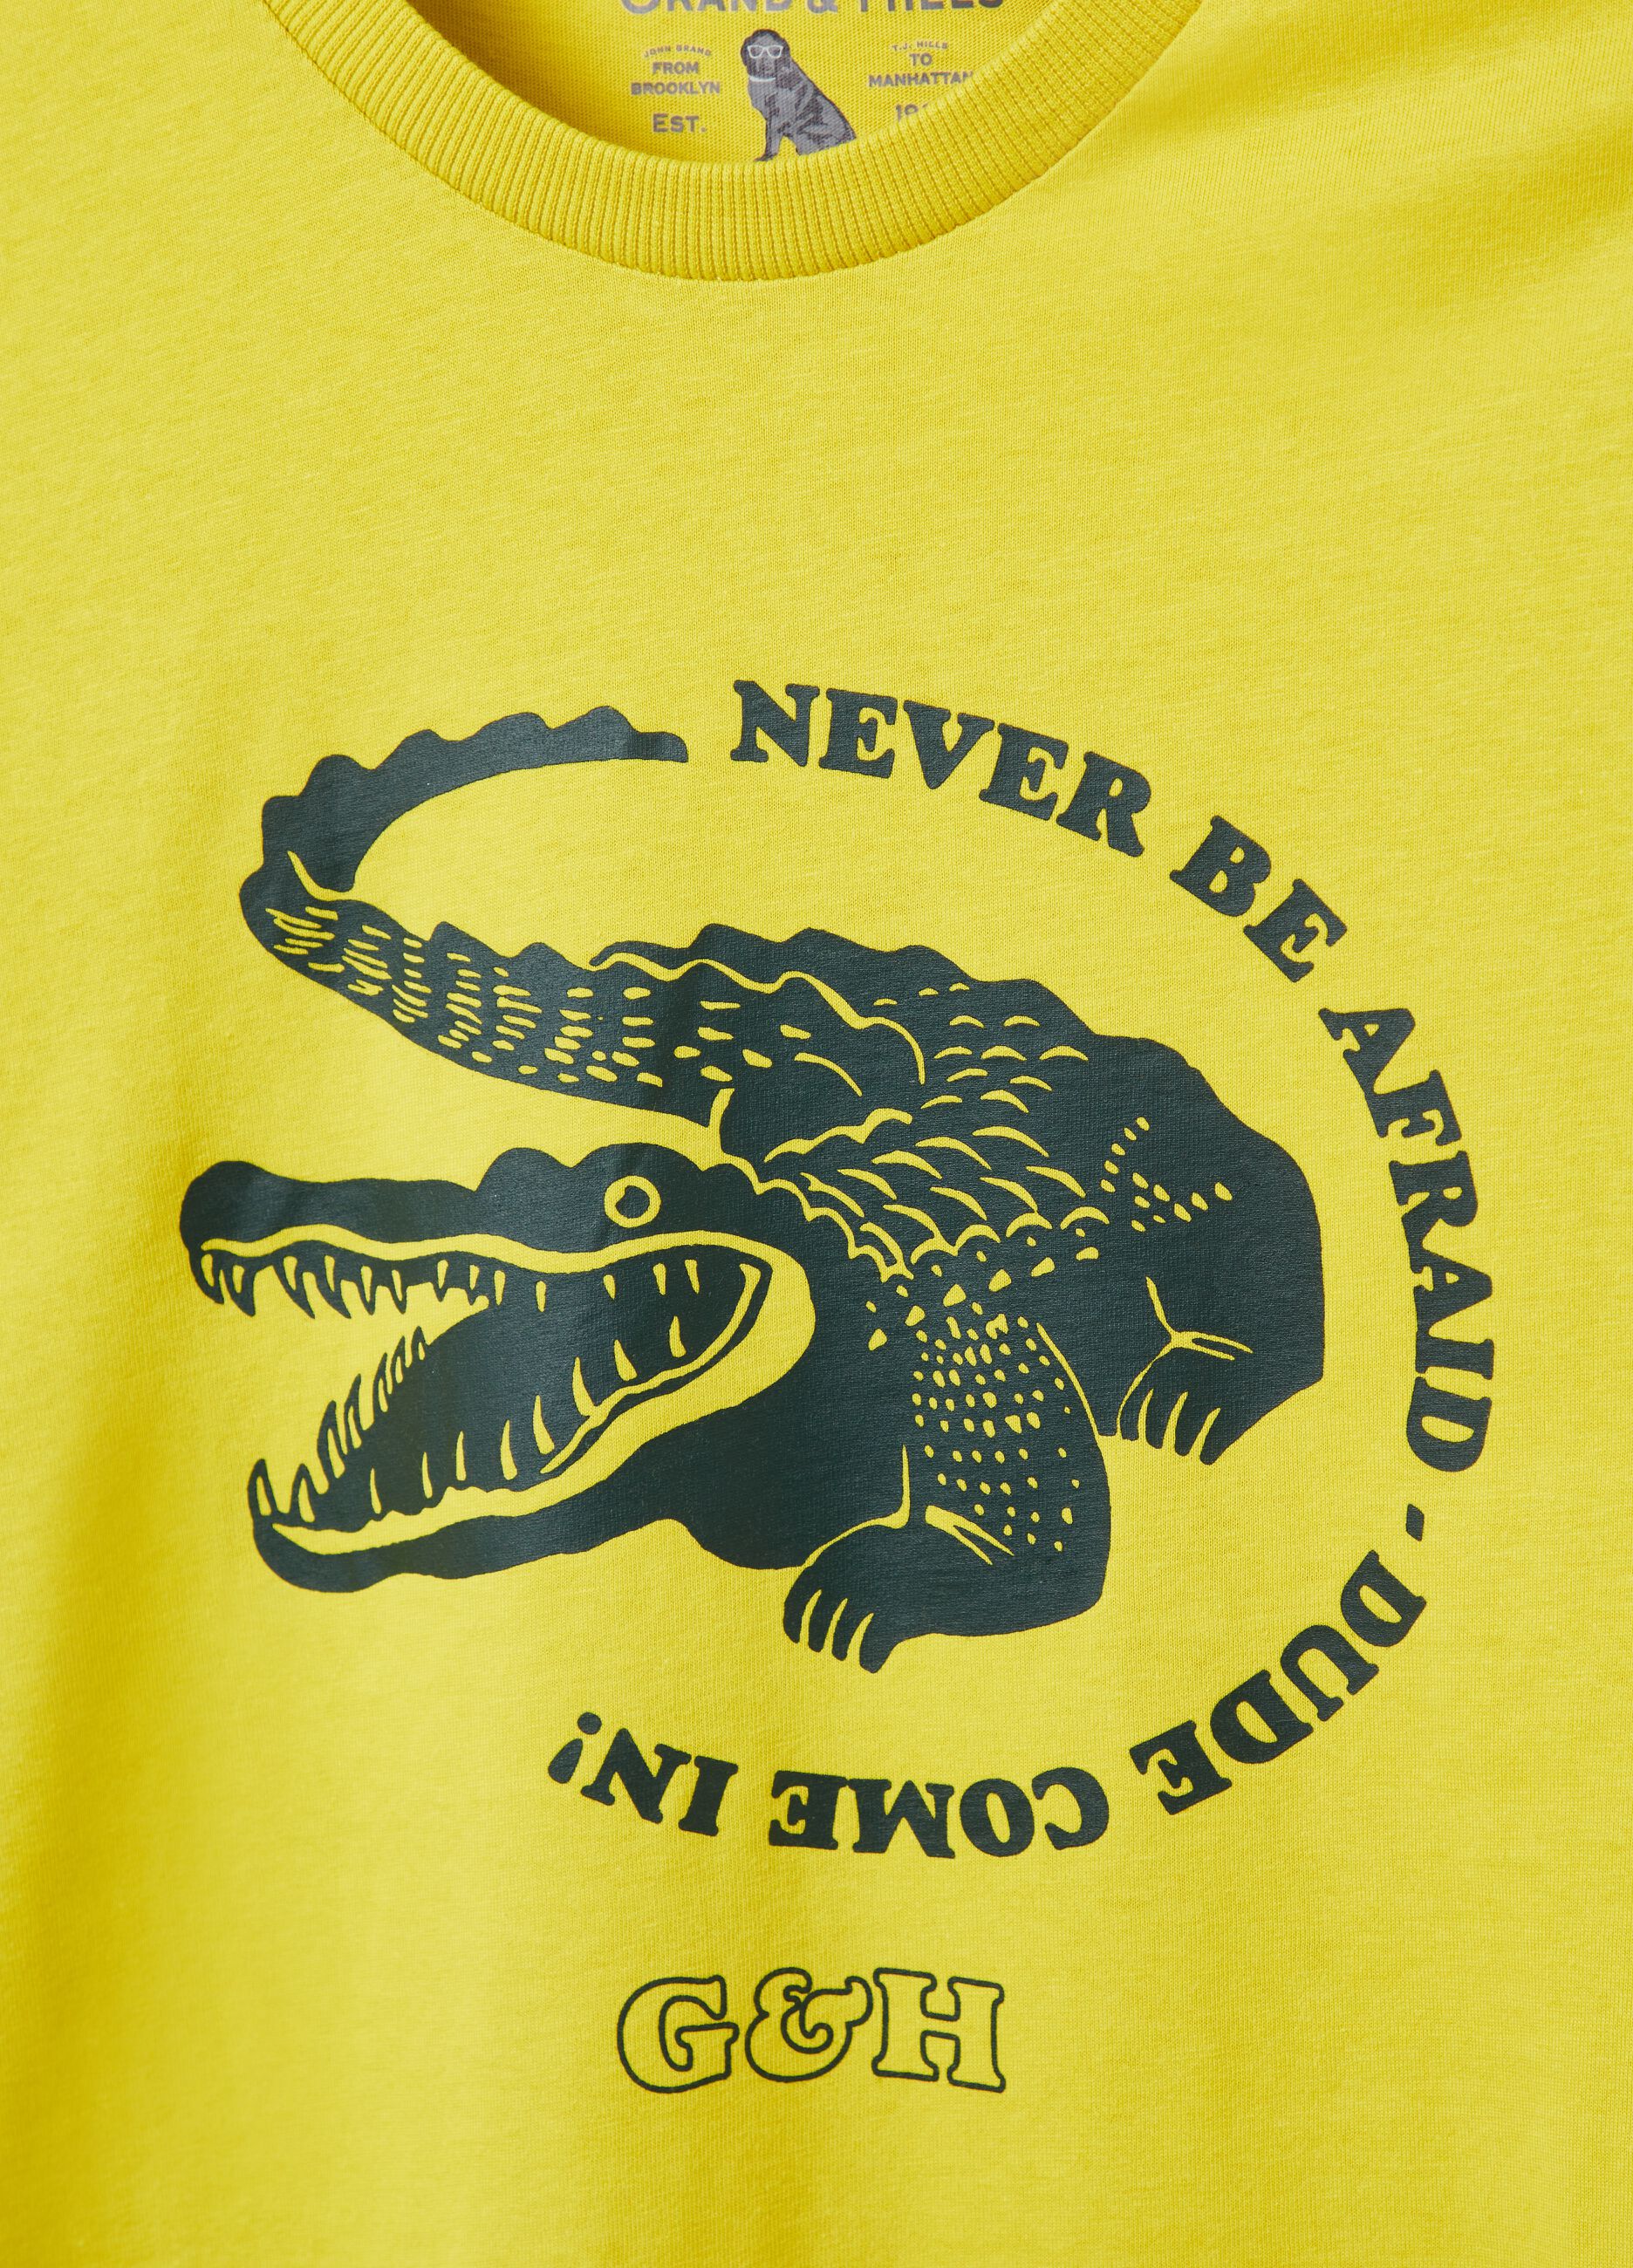 Grand&Hills T-shirt with crocodile print_2